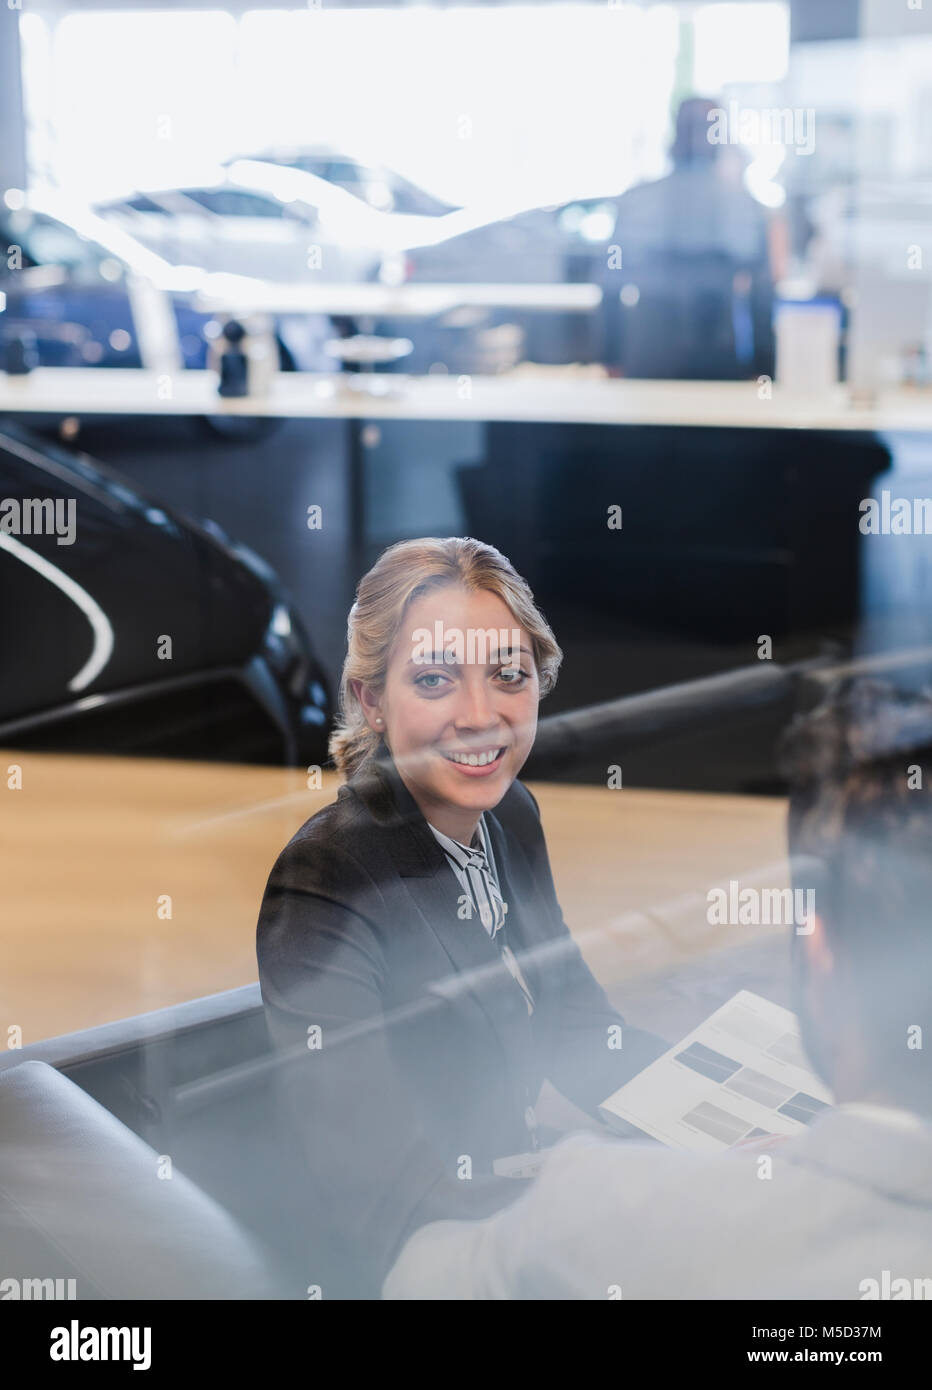 Portrait smiling car saleswoman working in car dealership showroom Banque D'Images